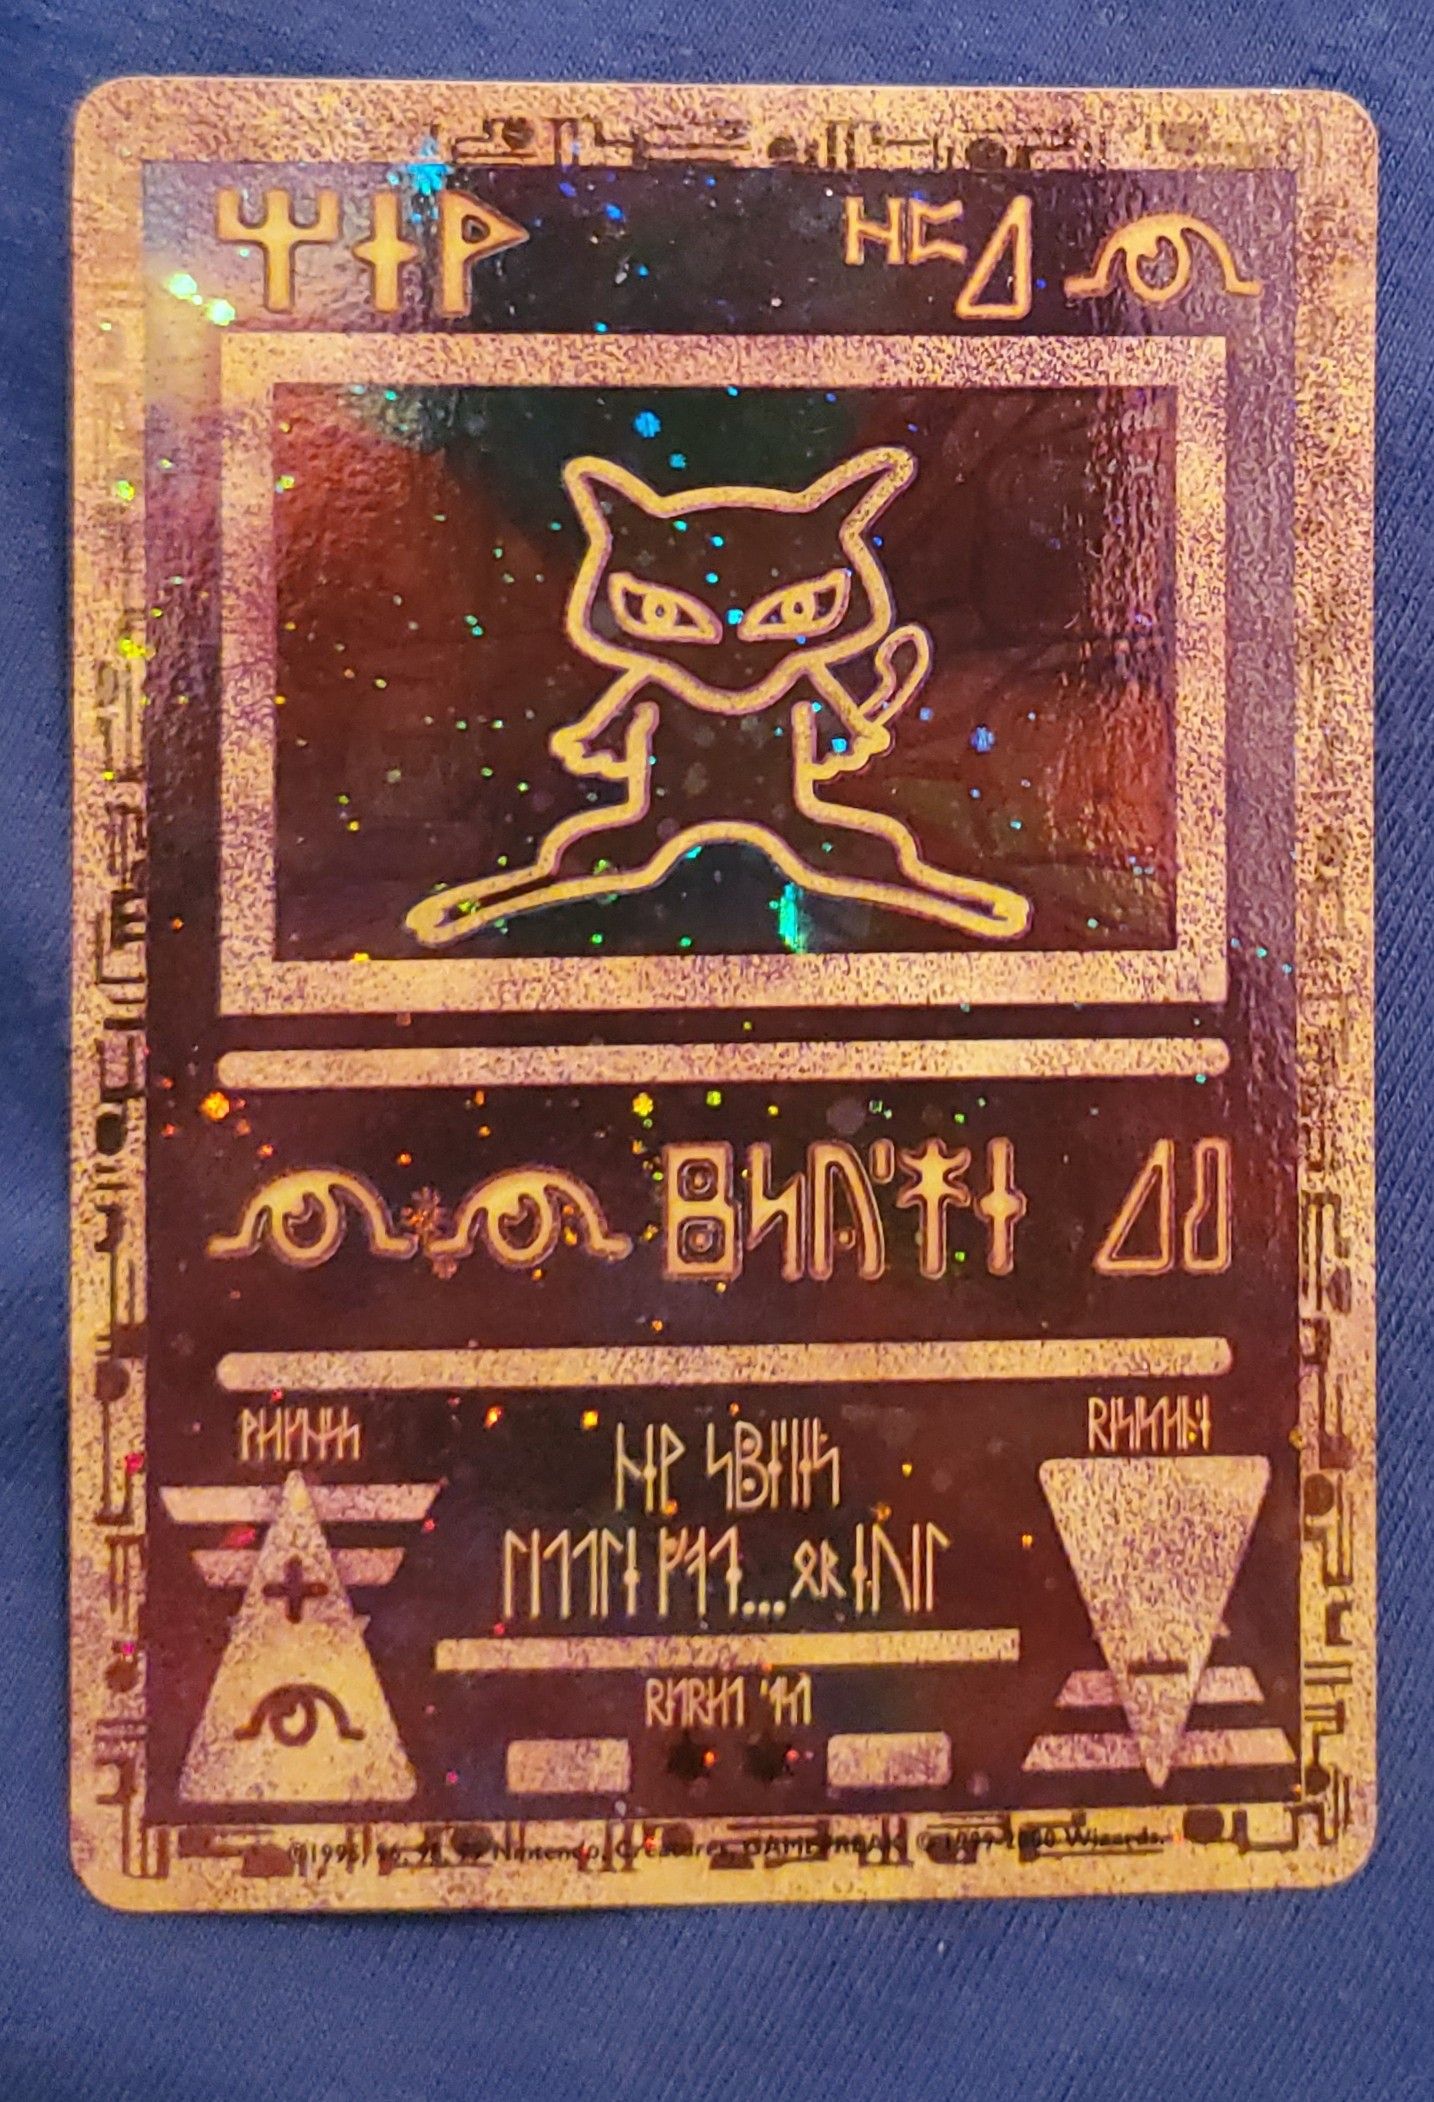 Pokemon The Movie Promo Holo Card - Ancient Mew